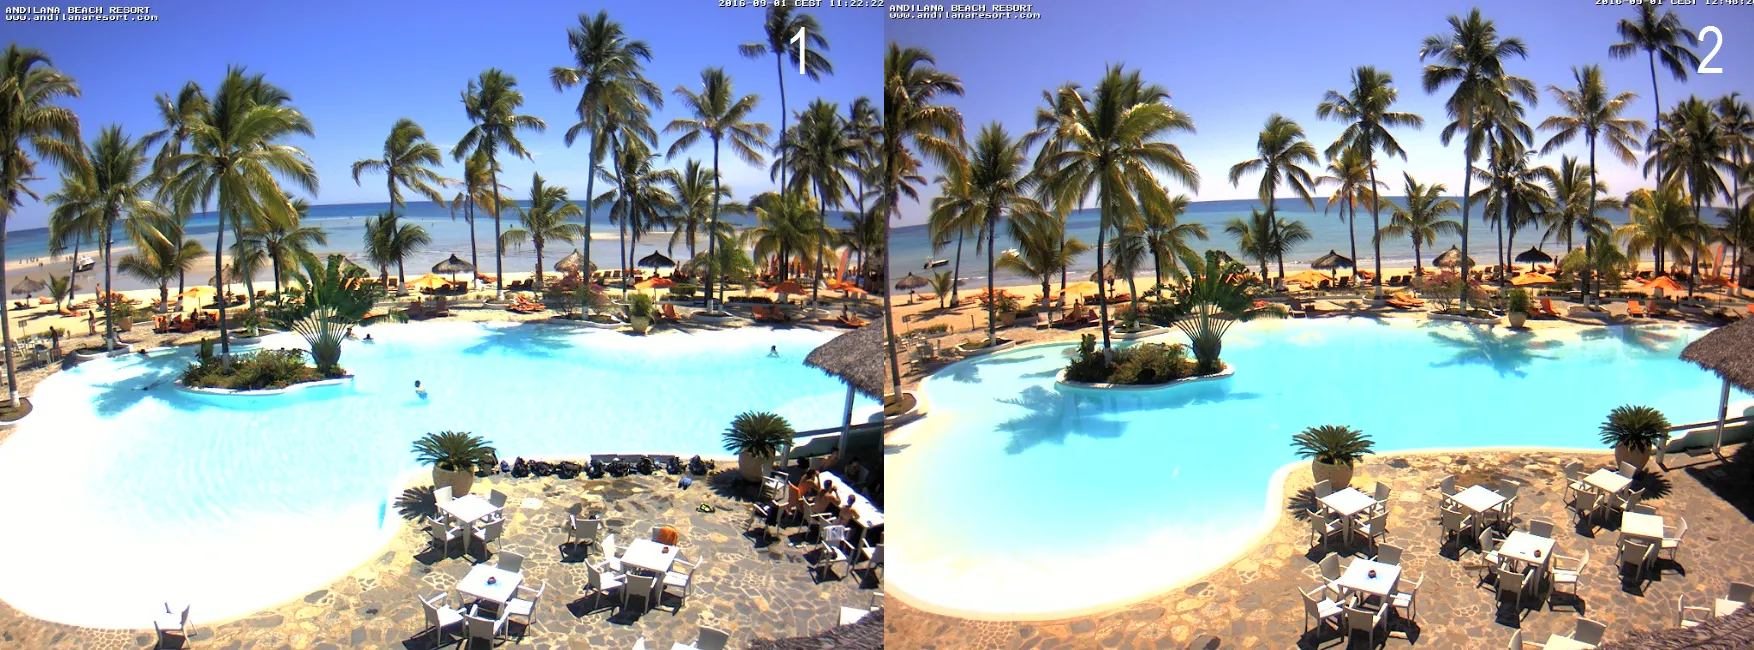 Andilana Beach Resort partial solar eclipse 2016 through webcam comparison